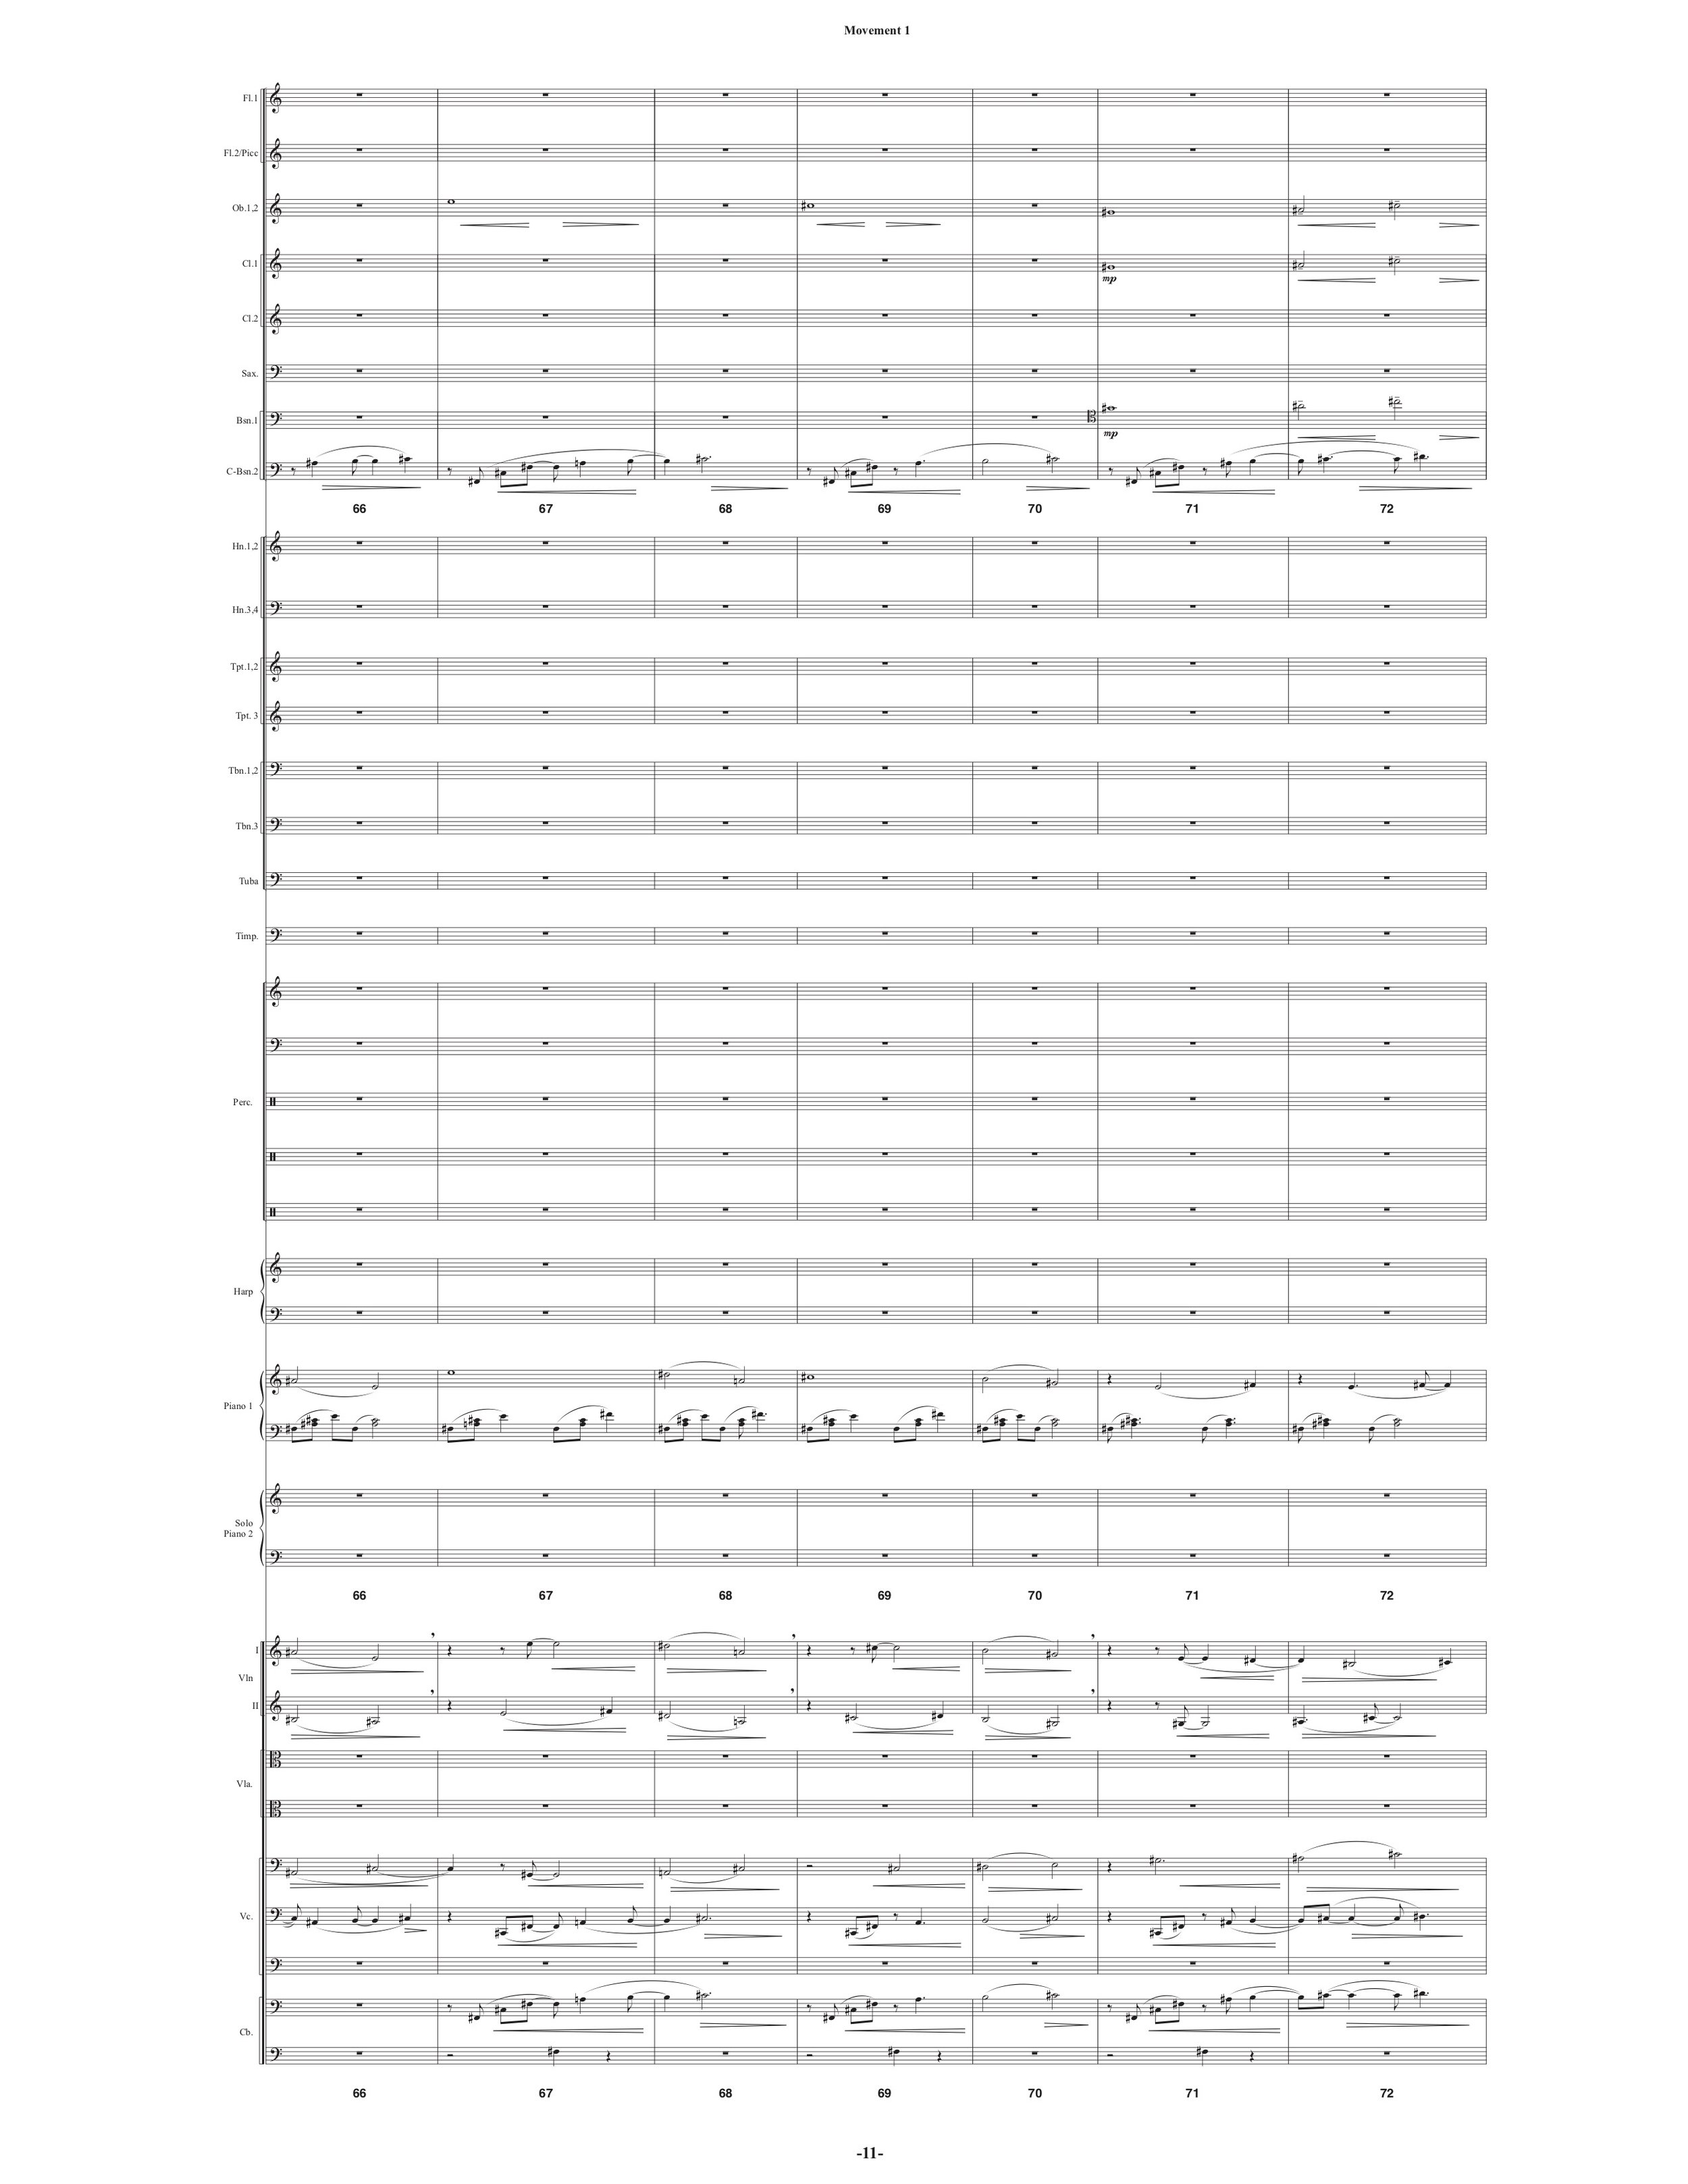 Symphony_Orch & 2 Pianos p16.jpg